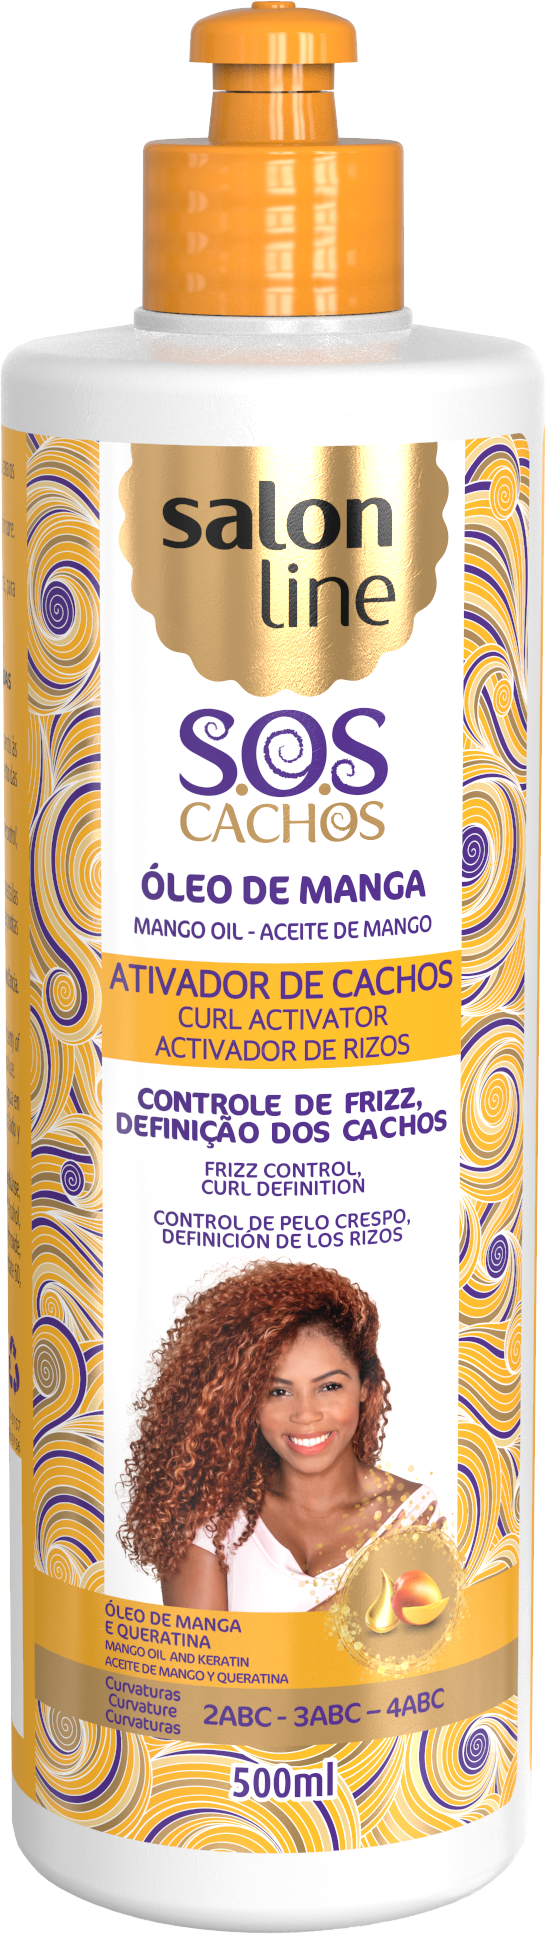 Salon Line S.O.S Cachos Mango Oil Curl Activator 500ml Novex